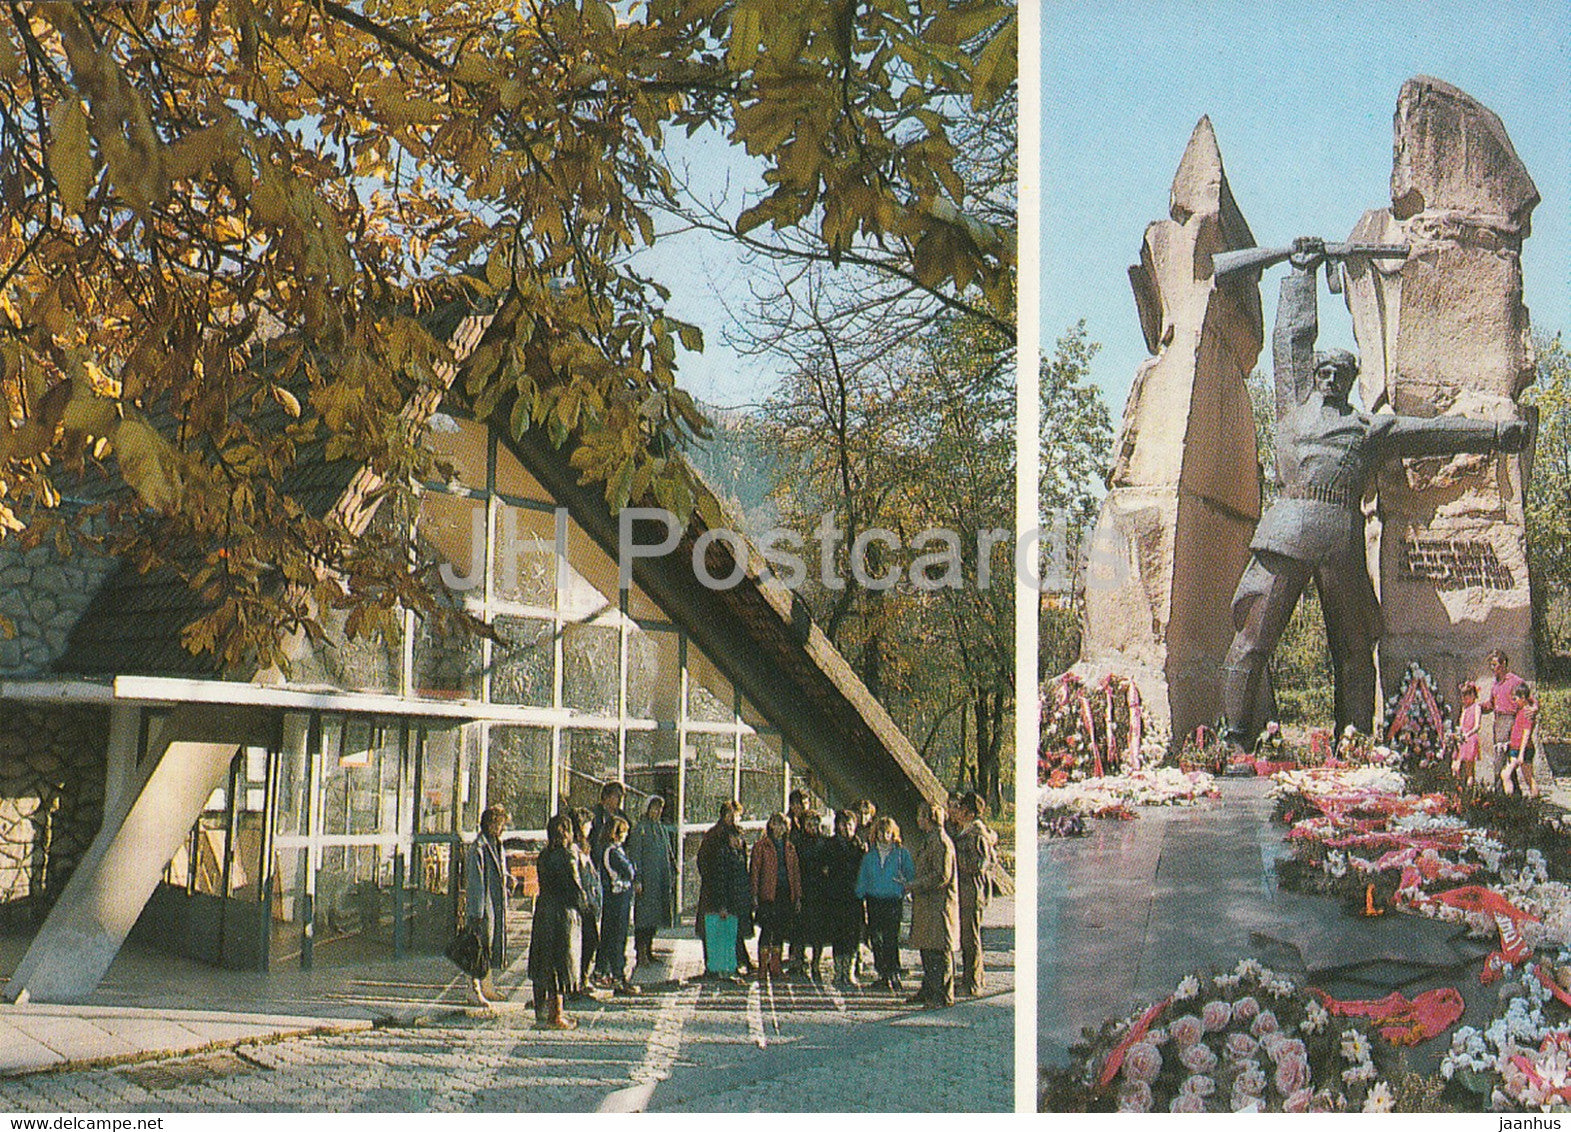 Yaremche - museum of partisan glory - memorable places of Ivano-Frankivsk Region - 1988 - Ukraine USSR - unused - JH Postcards